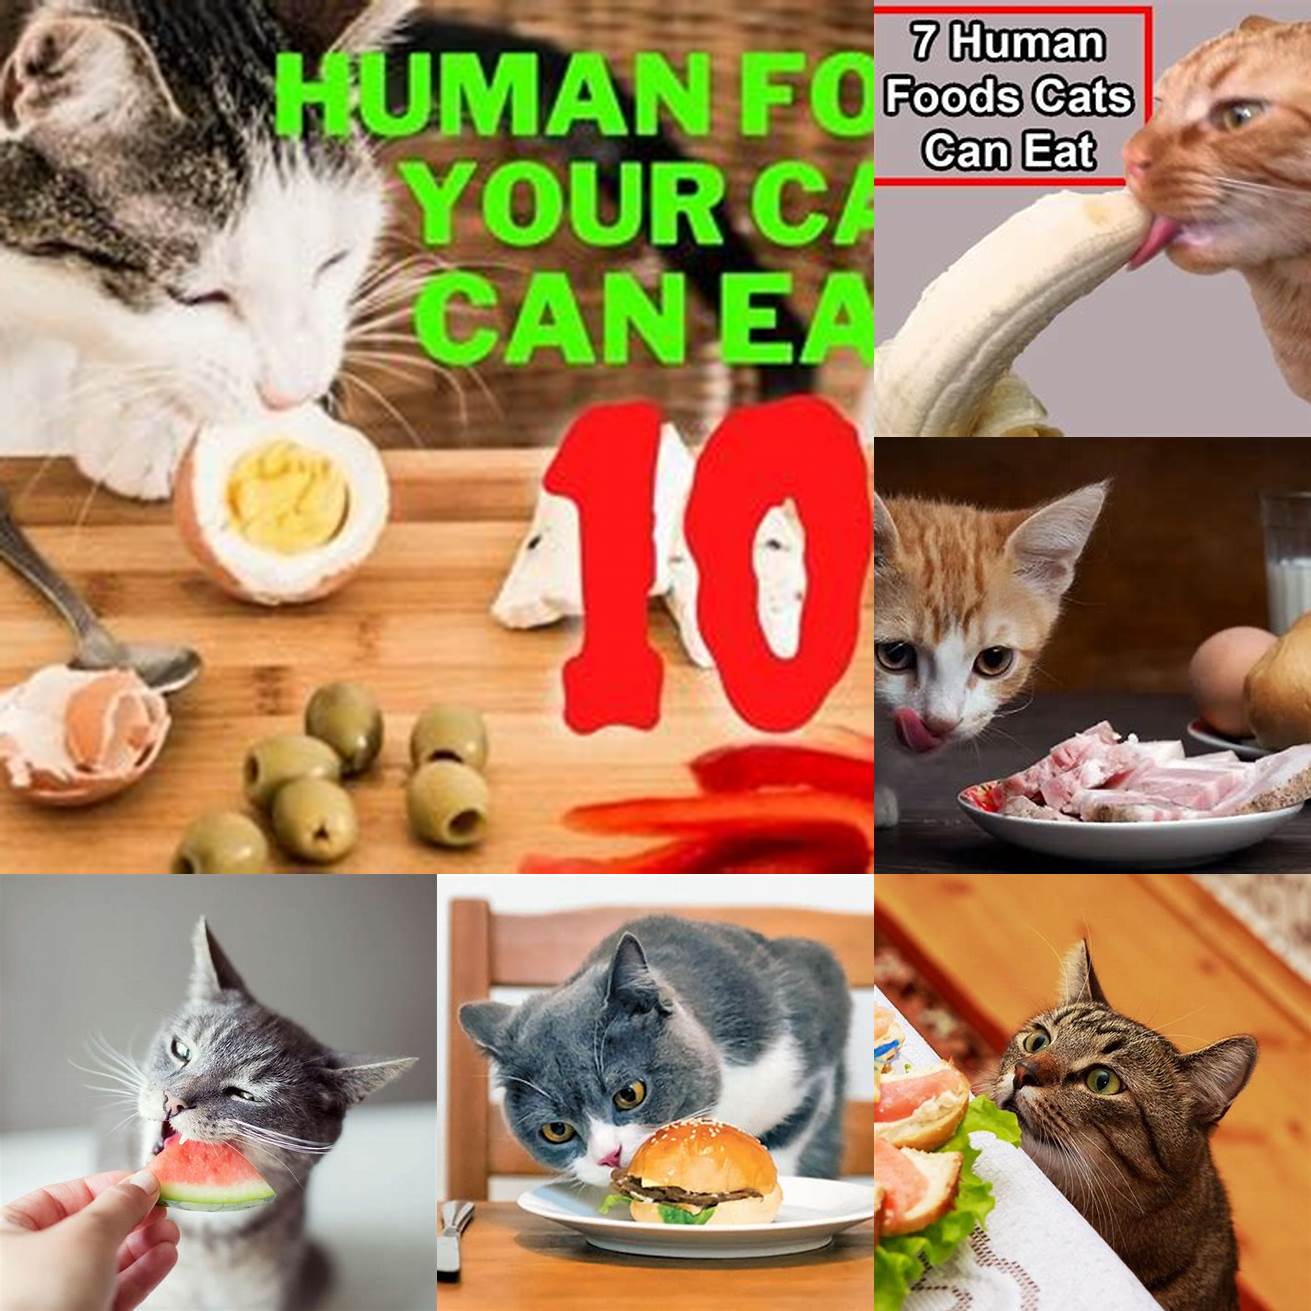 Q Can cats eat human food